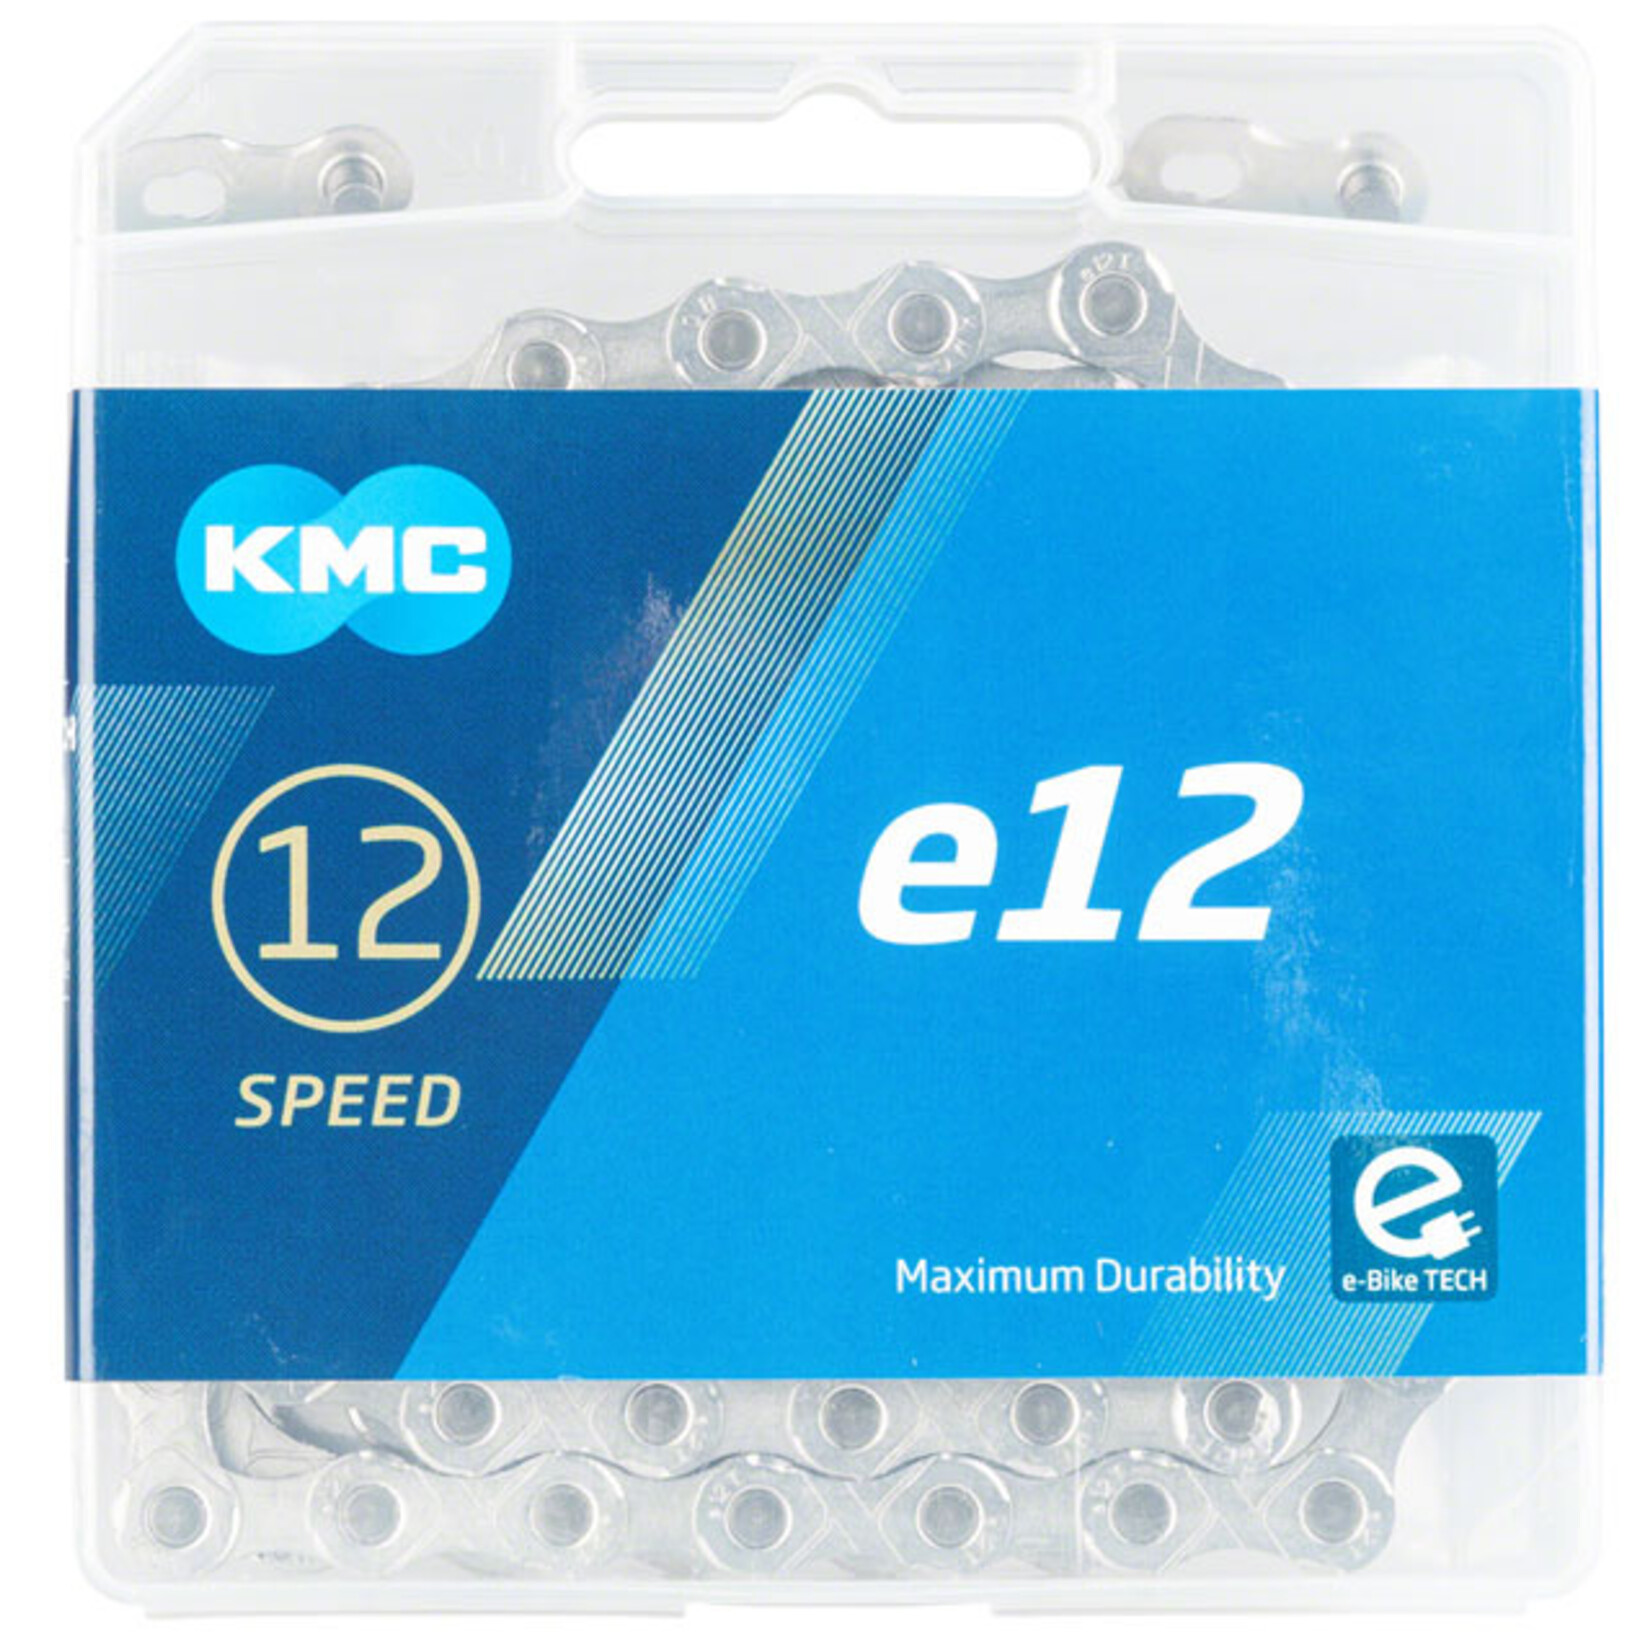 KMC KMC e12 Chain - 12-Speed, 136 Links, Silver